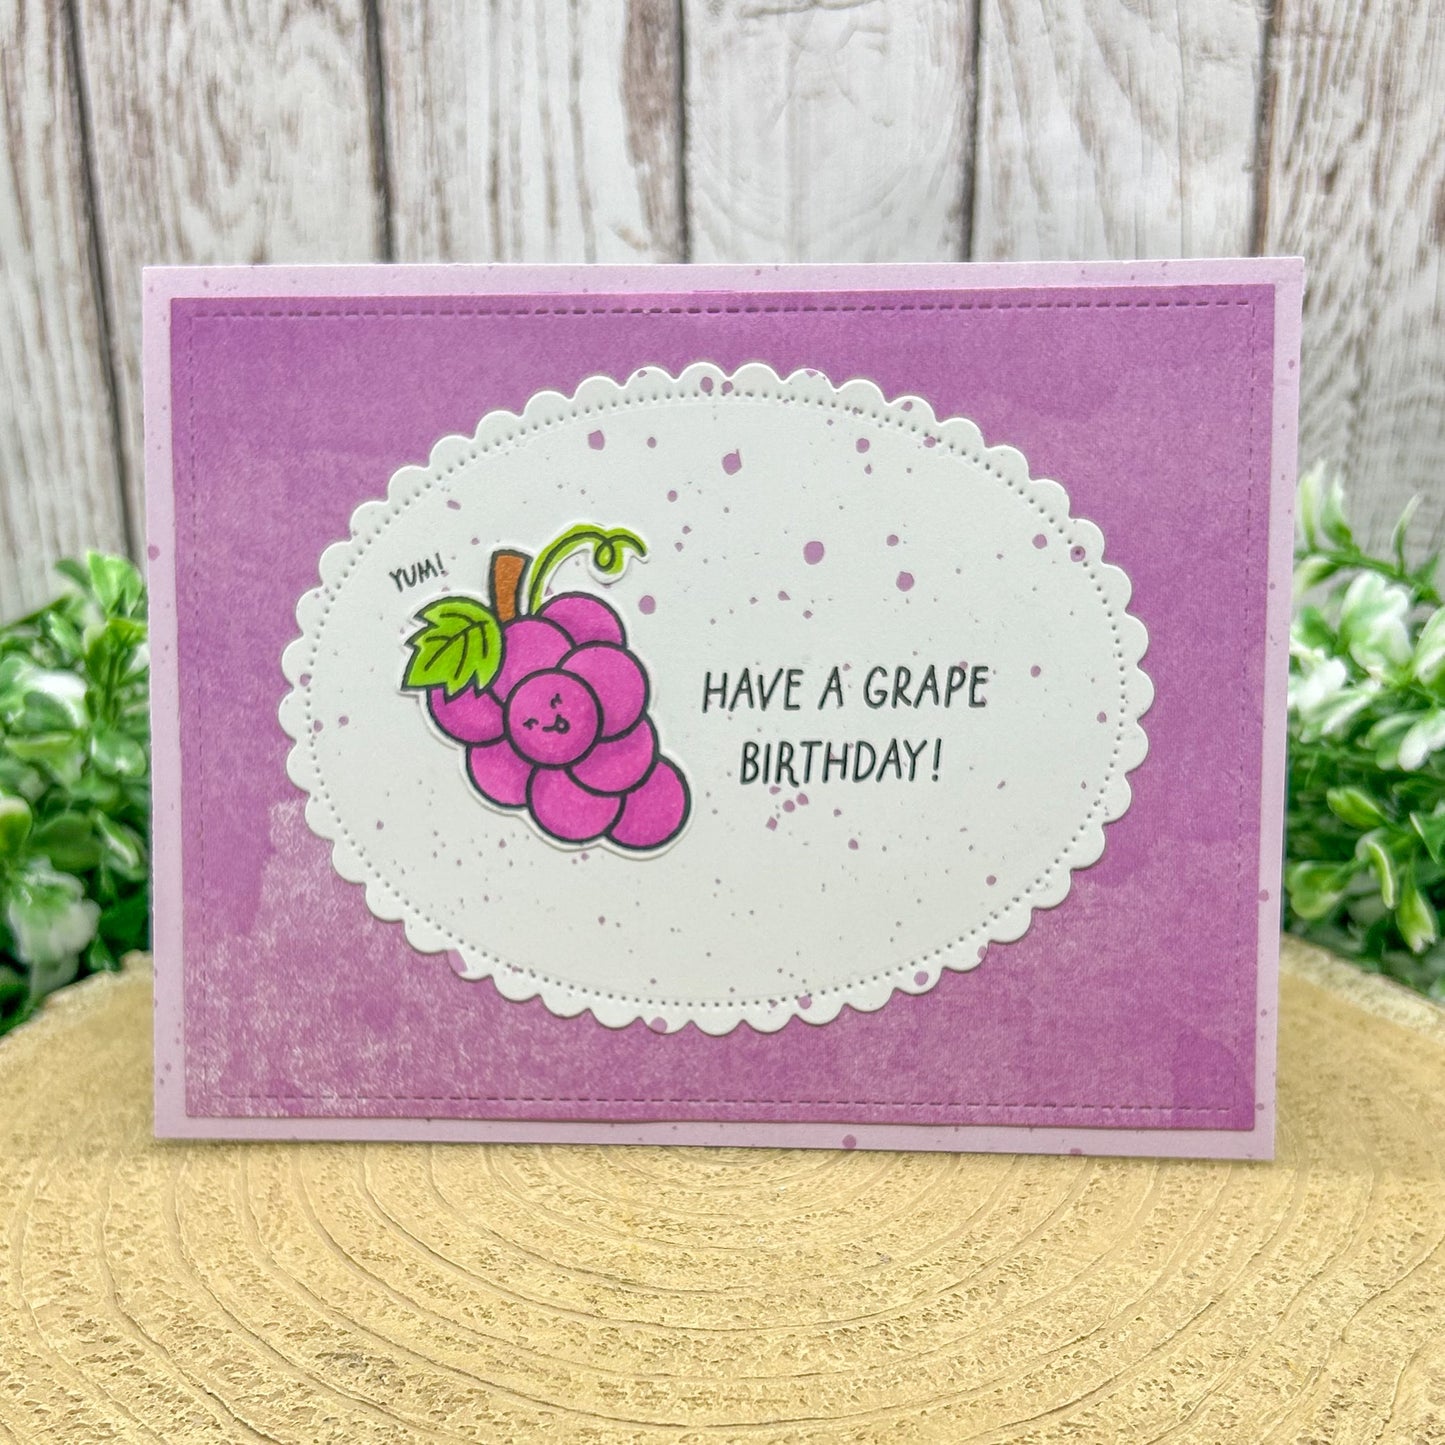 Have A Grape Birthday! Handmade Birthday Card